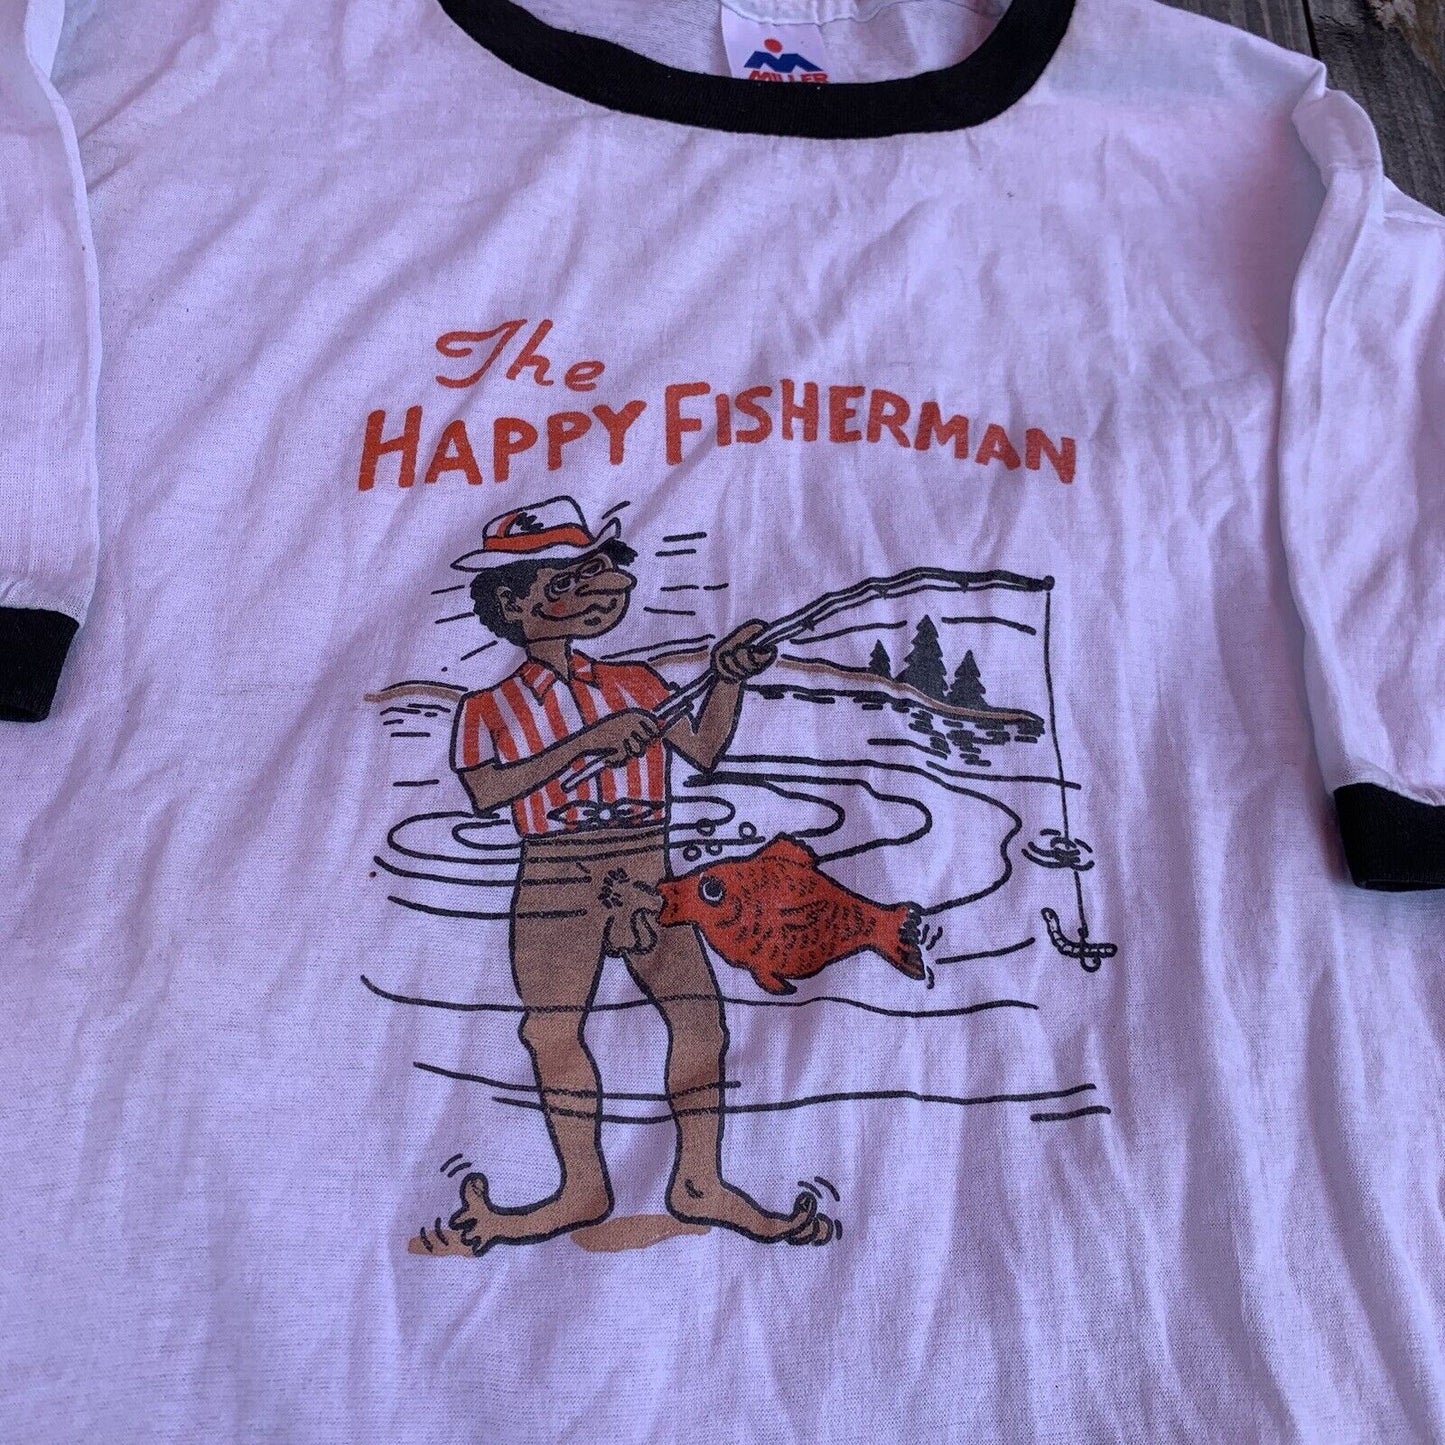 Vintage 80s 90s The Happy Fisherman T-Shirt XXL Novelty Crude Humor Parody Tee